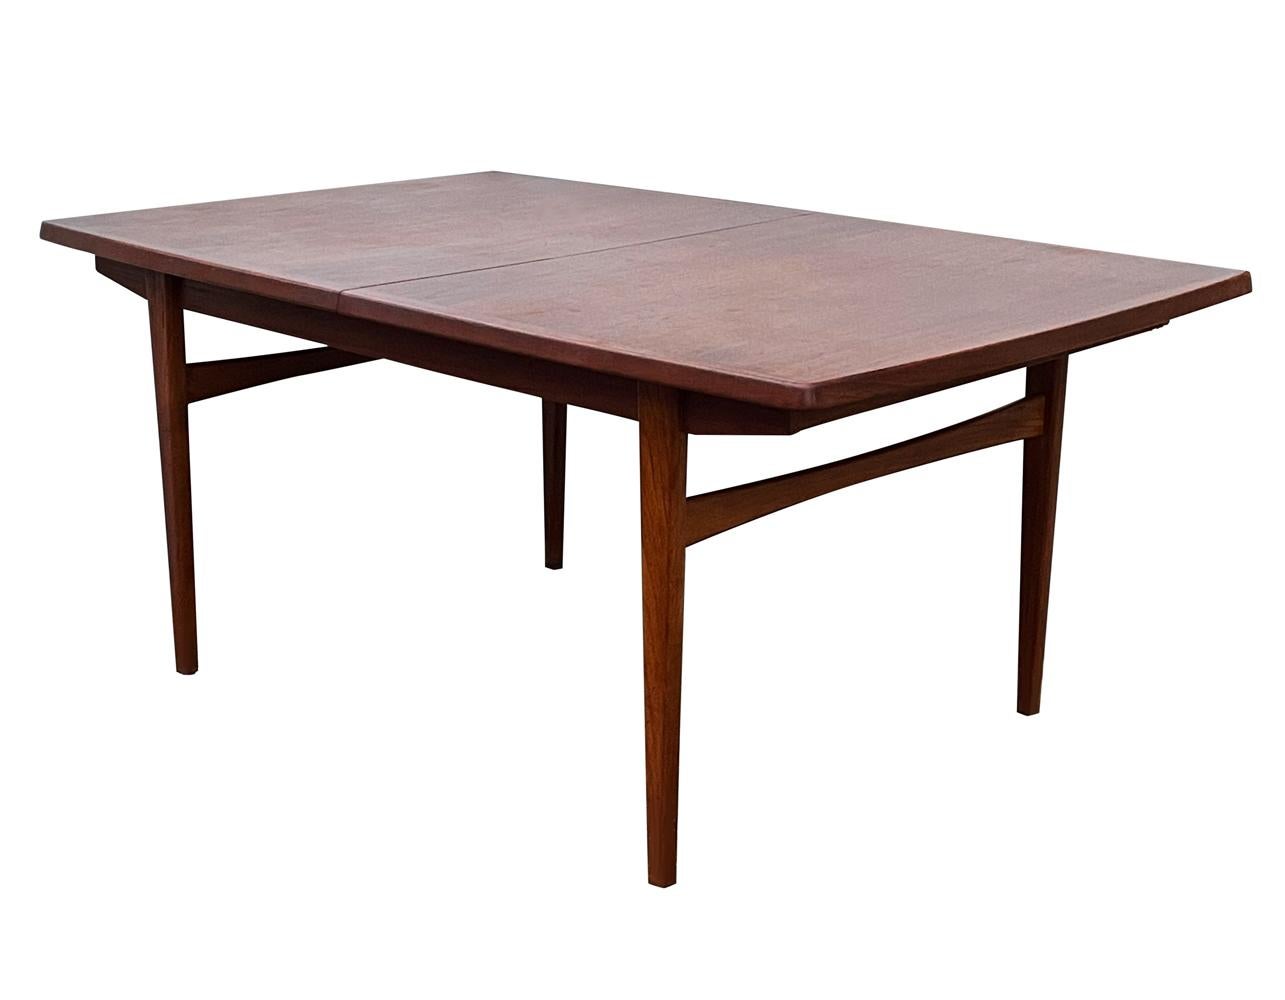 Scandinavian Modern Mid Century Danish Modern Rectangular Dining Table in Teak with 2 Extension Leaf